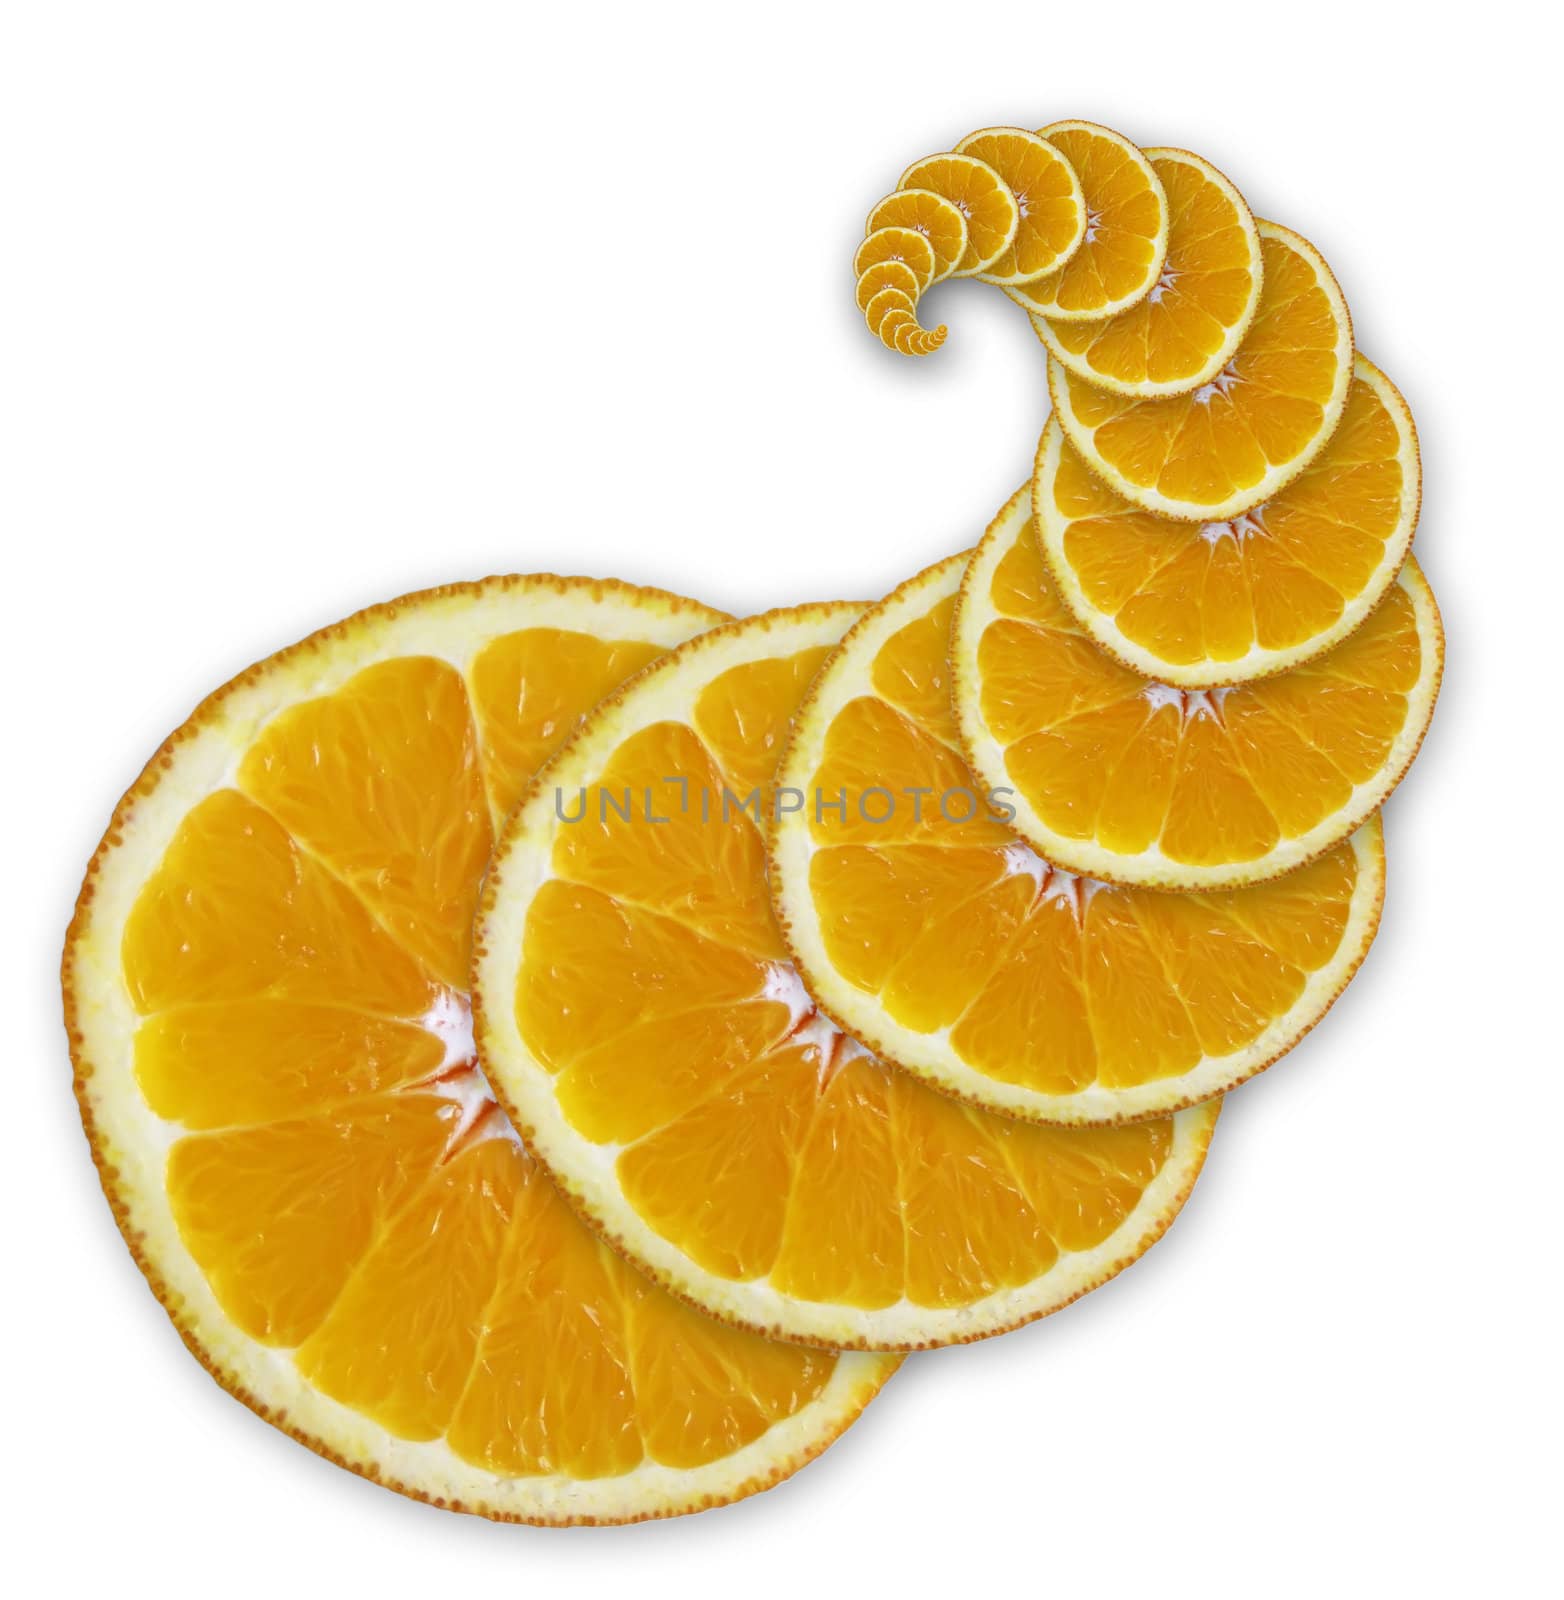 Fresh juicy orange slices in spiral